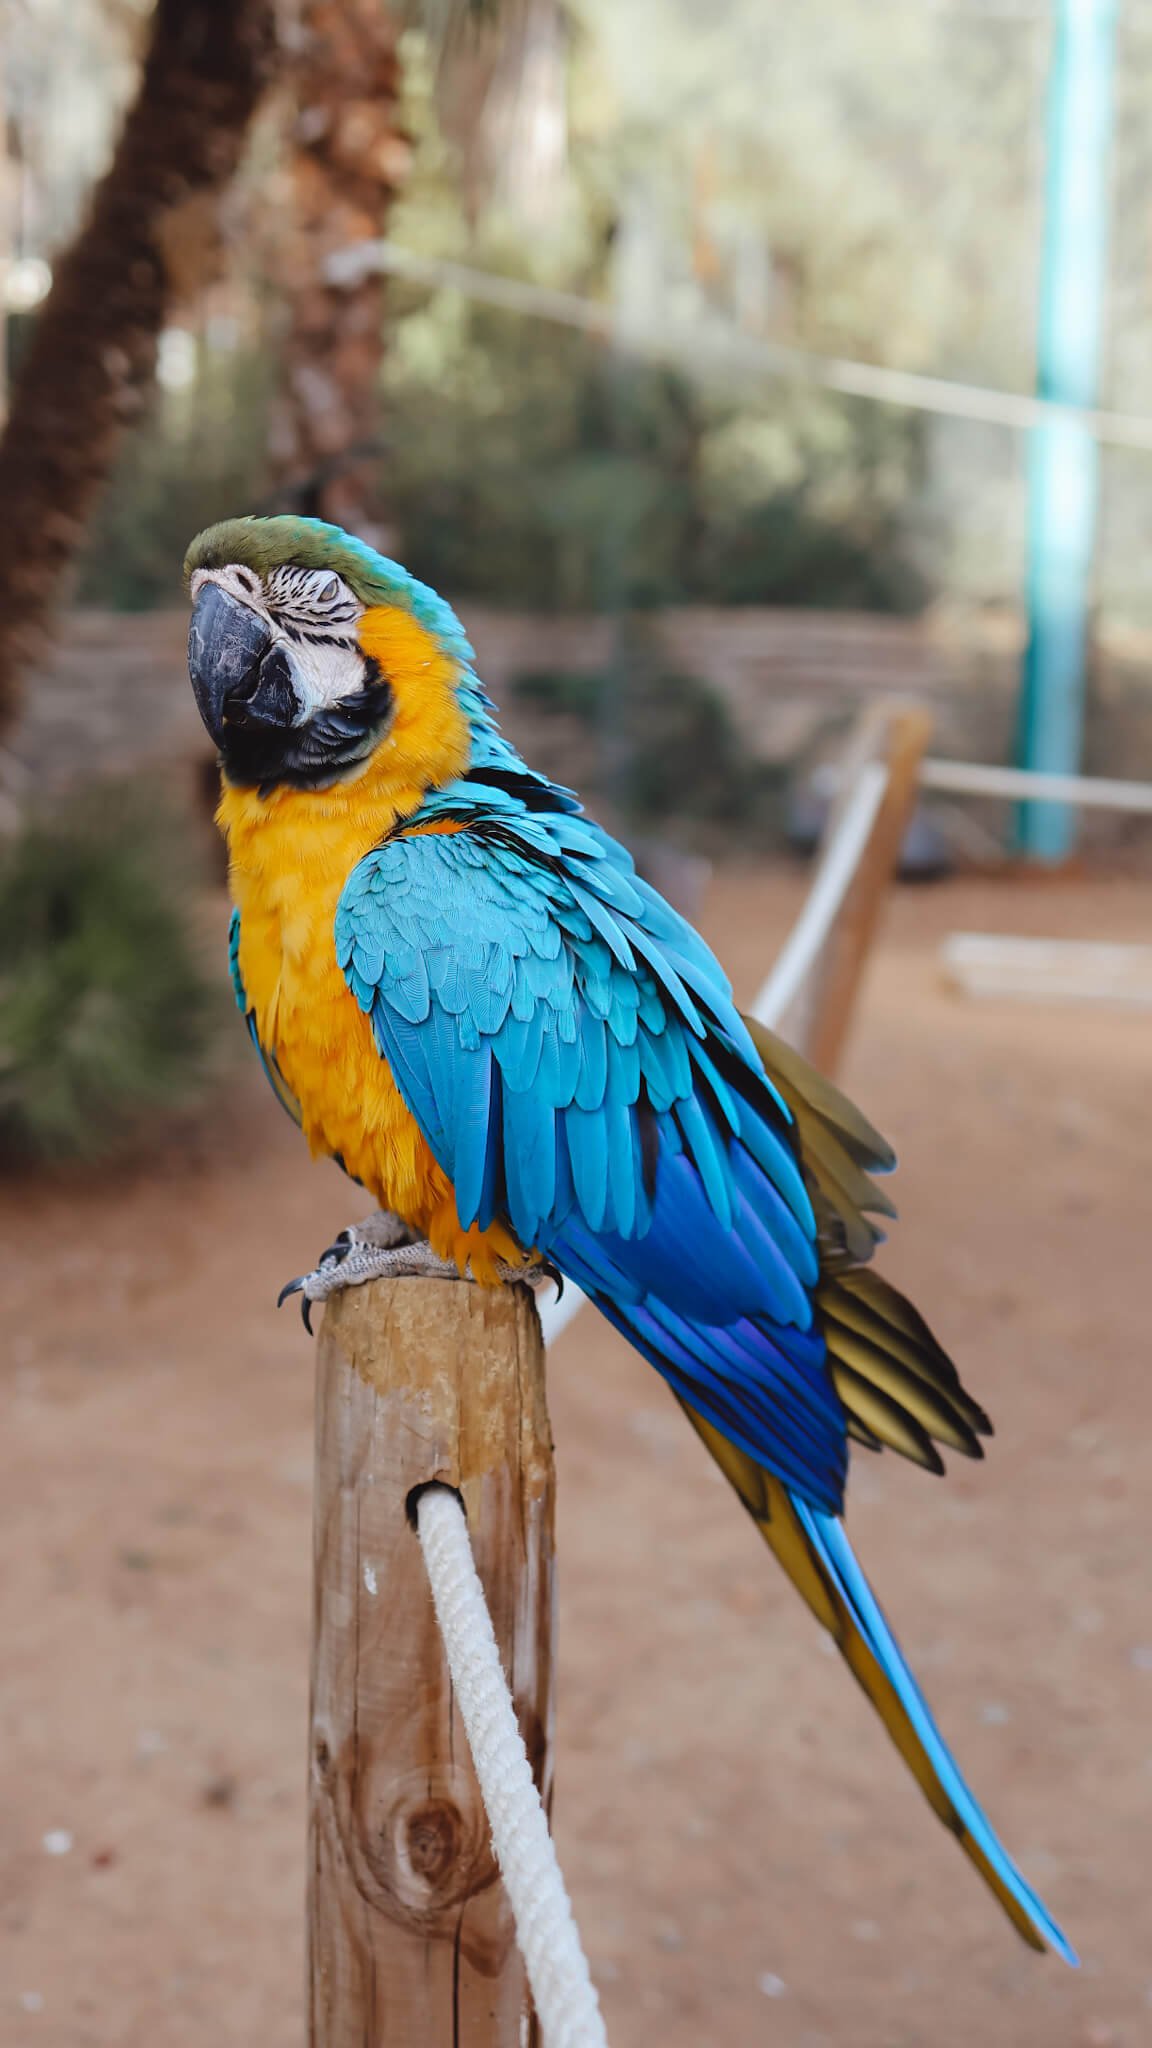 costa-daurada-best-things-to-do-parc-sama-parrot.jpg